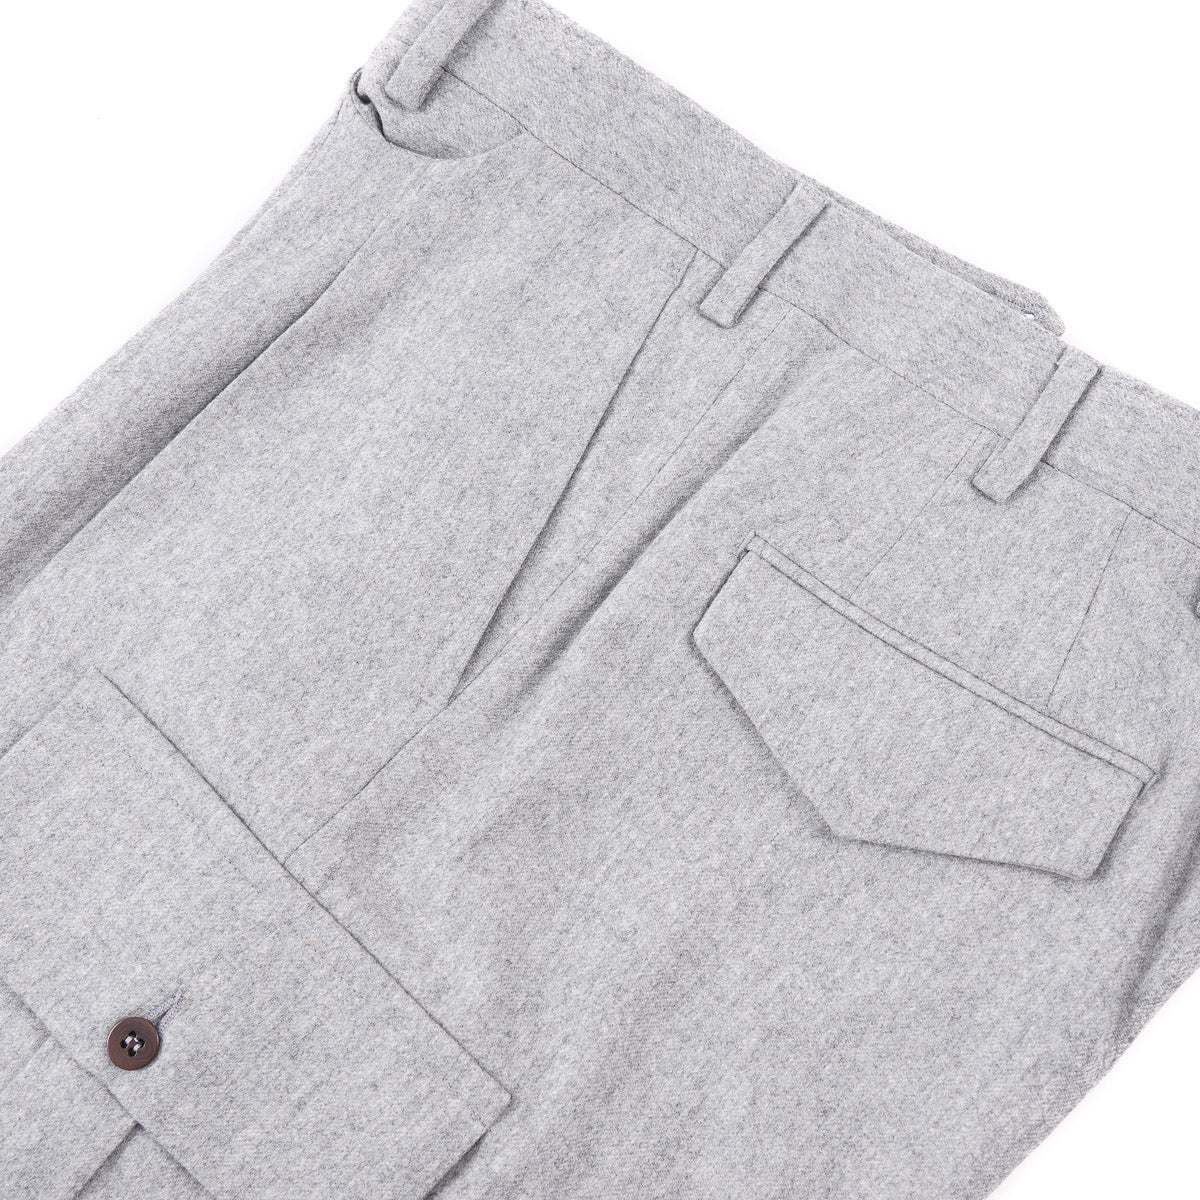 Sartorio Flannel Pants with Cargo Pockets - Top Shelf Apparel